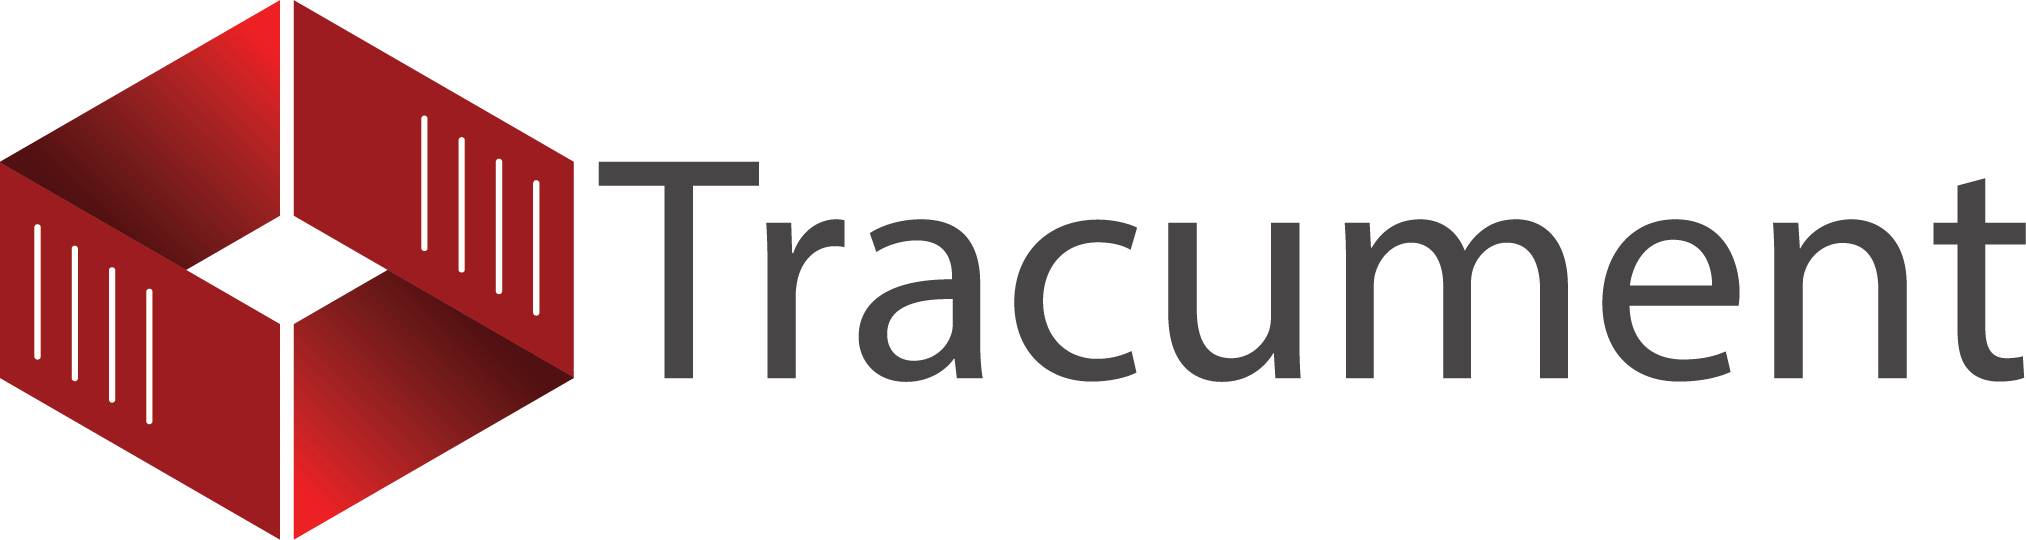 Tracument logo